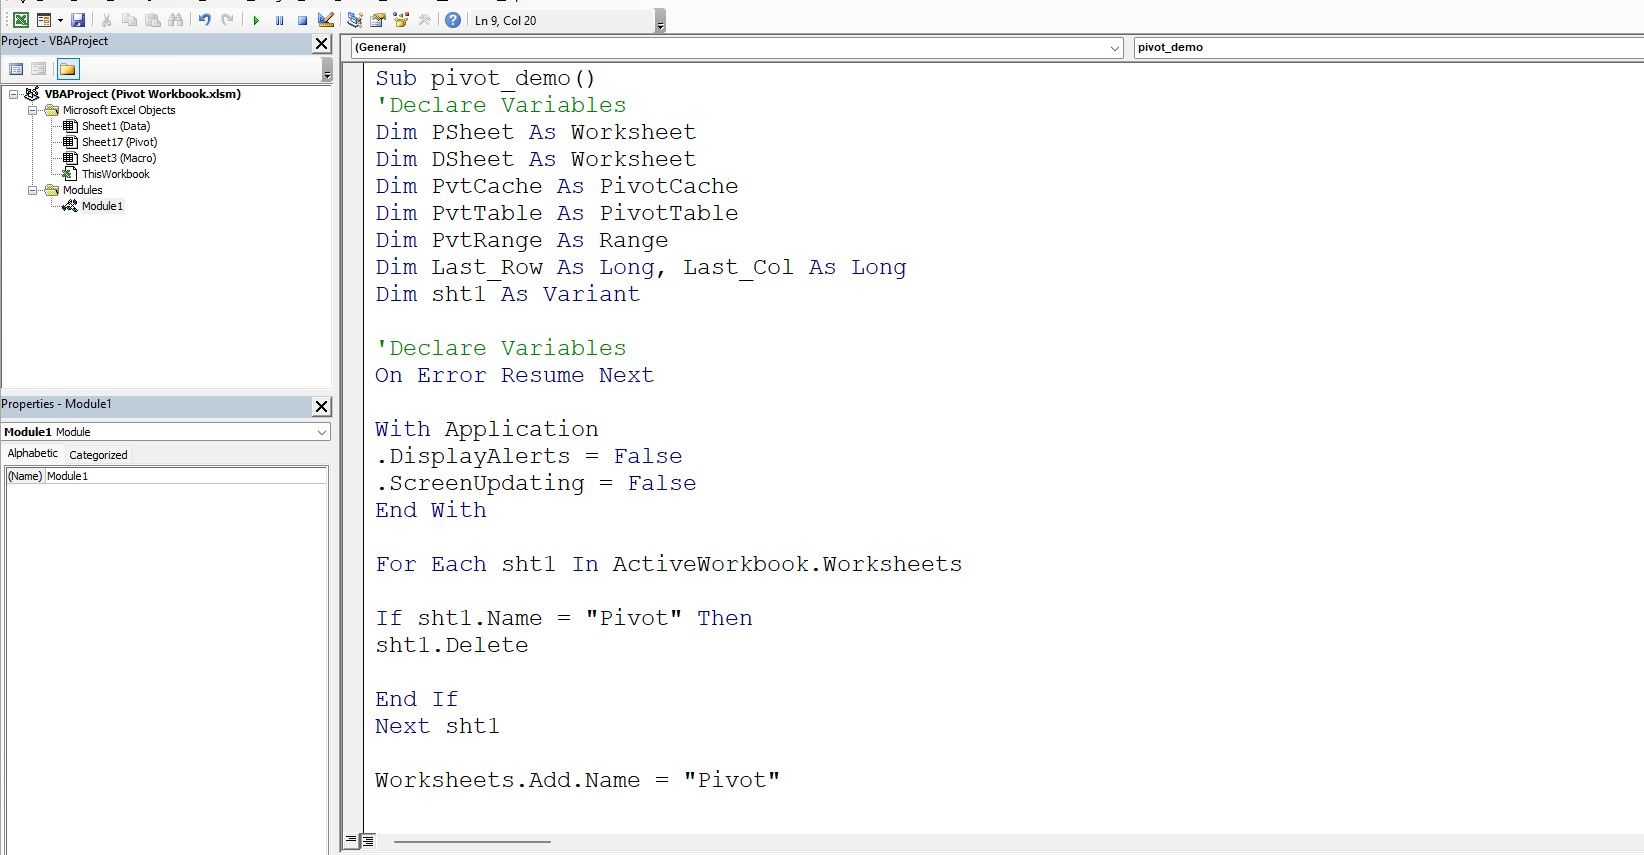 Excel VBA code editor window interface